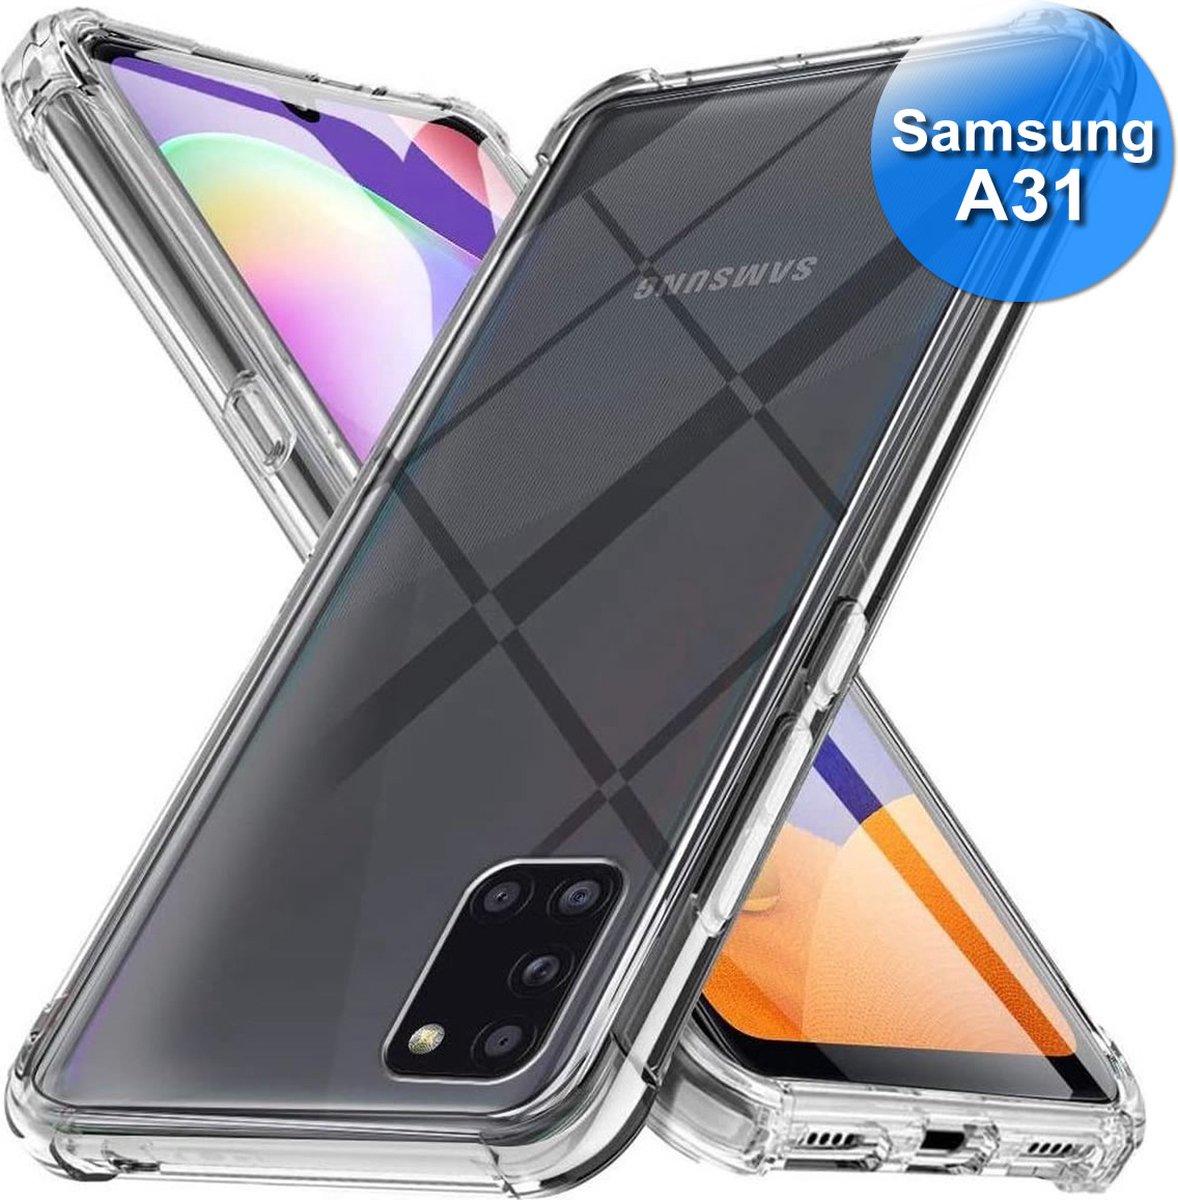 Telefoonhoesje geschikt voor de Samsung A31 - Anti Shock hoesje - Hard Back Cover - Transparant